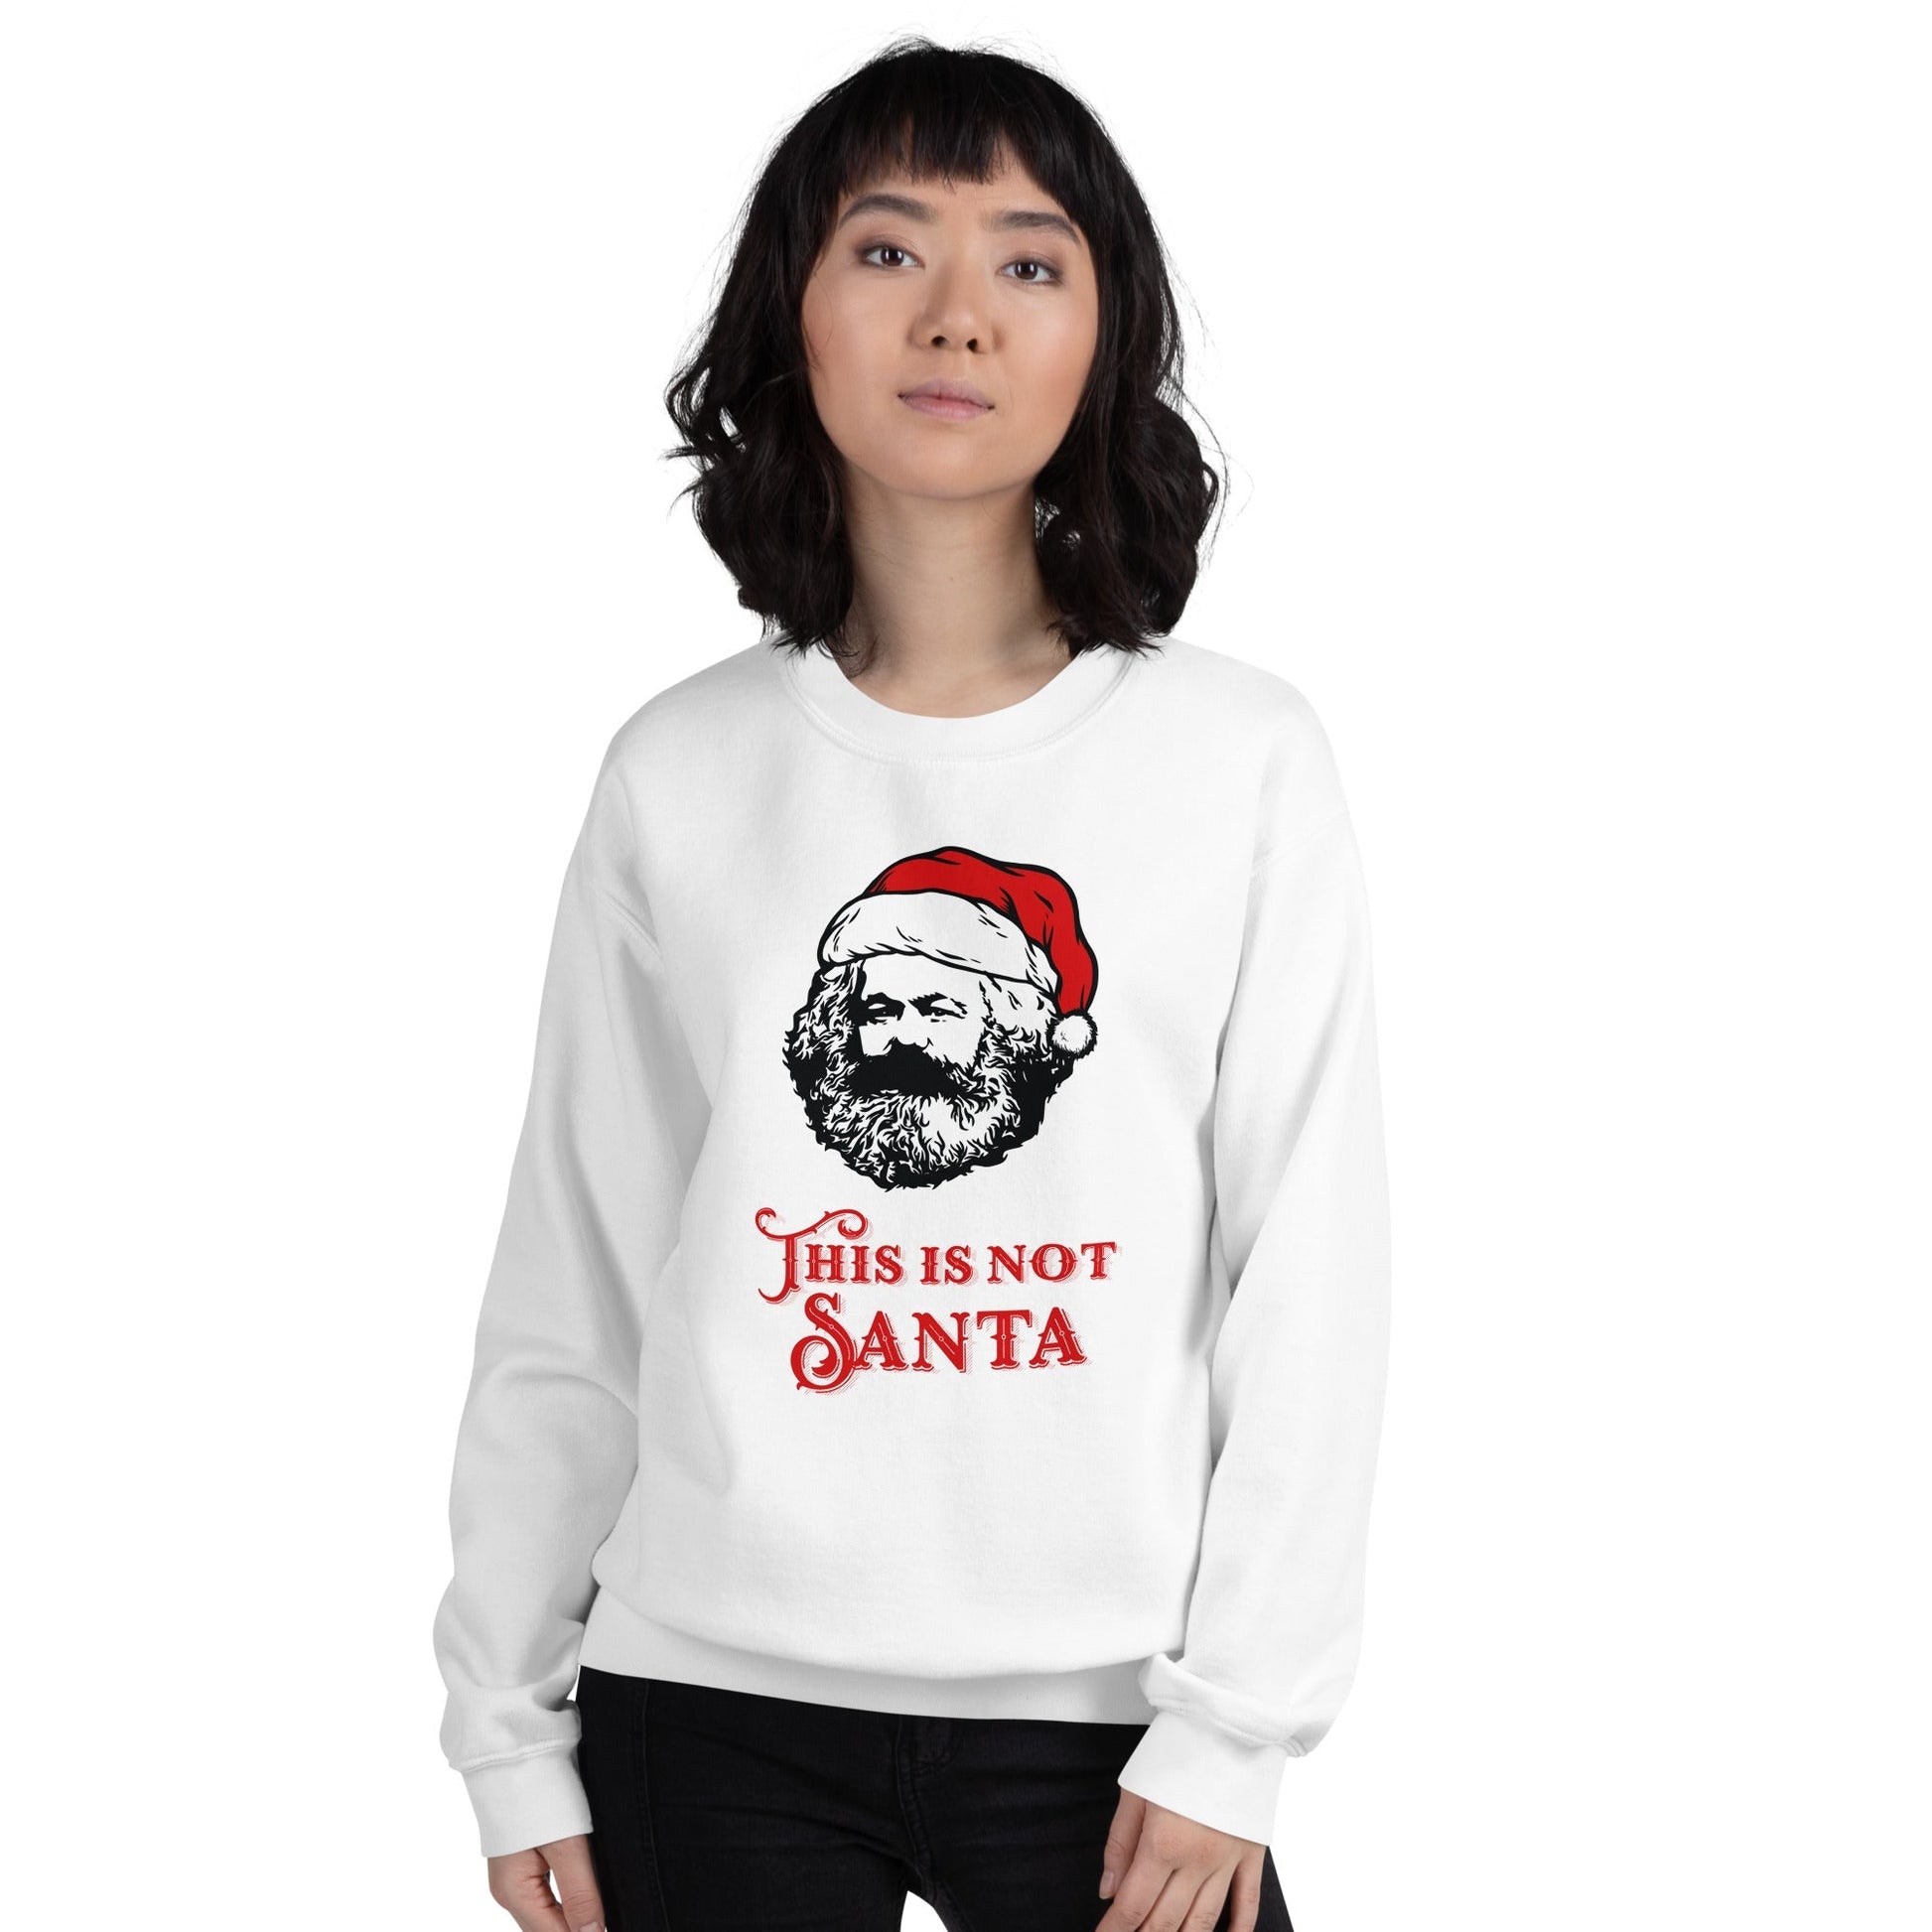 Marx - This Is Not Santa - Sweatshirt